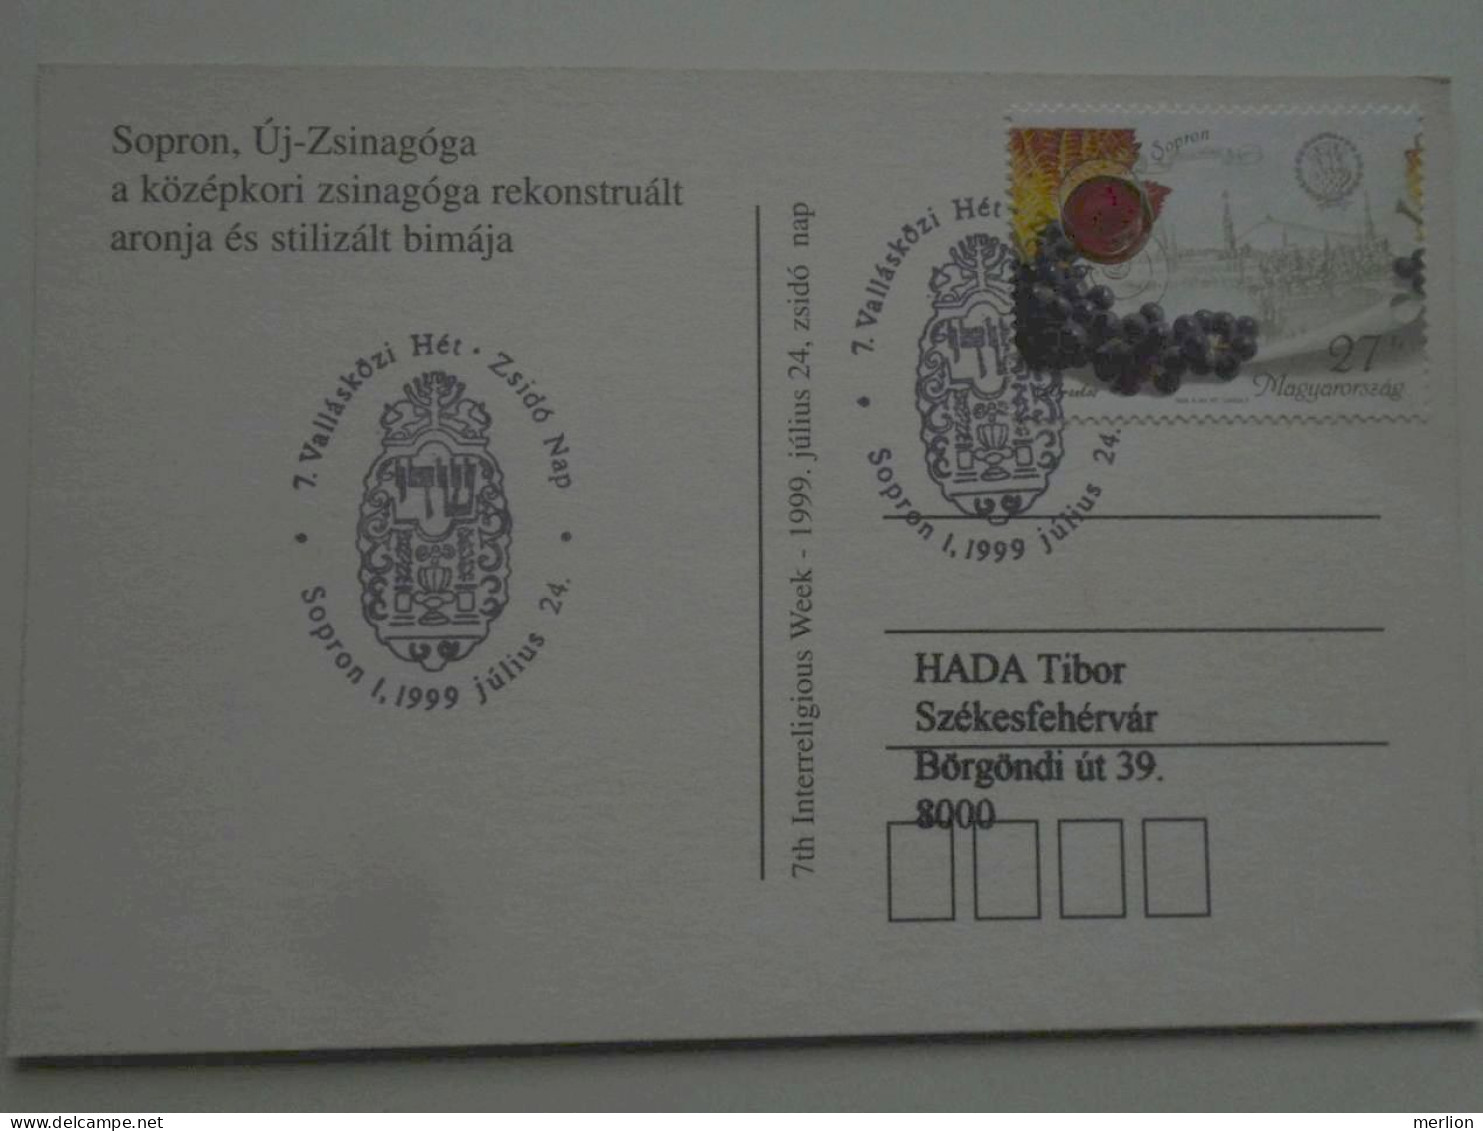 D201088   Hungary  Sopron  - Special Postmark - Interfaith Week Sopron - Jewish  Day    1999 Synagogue - Jewish